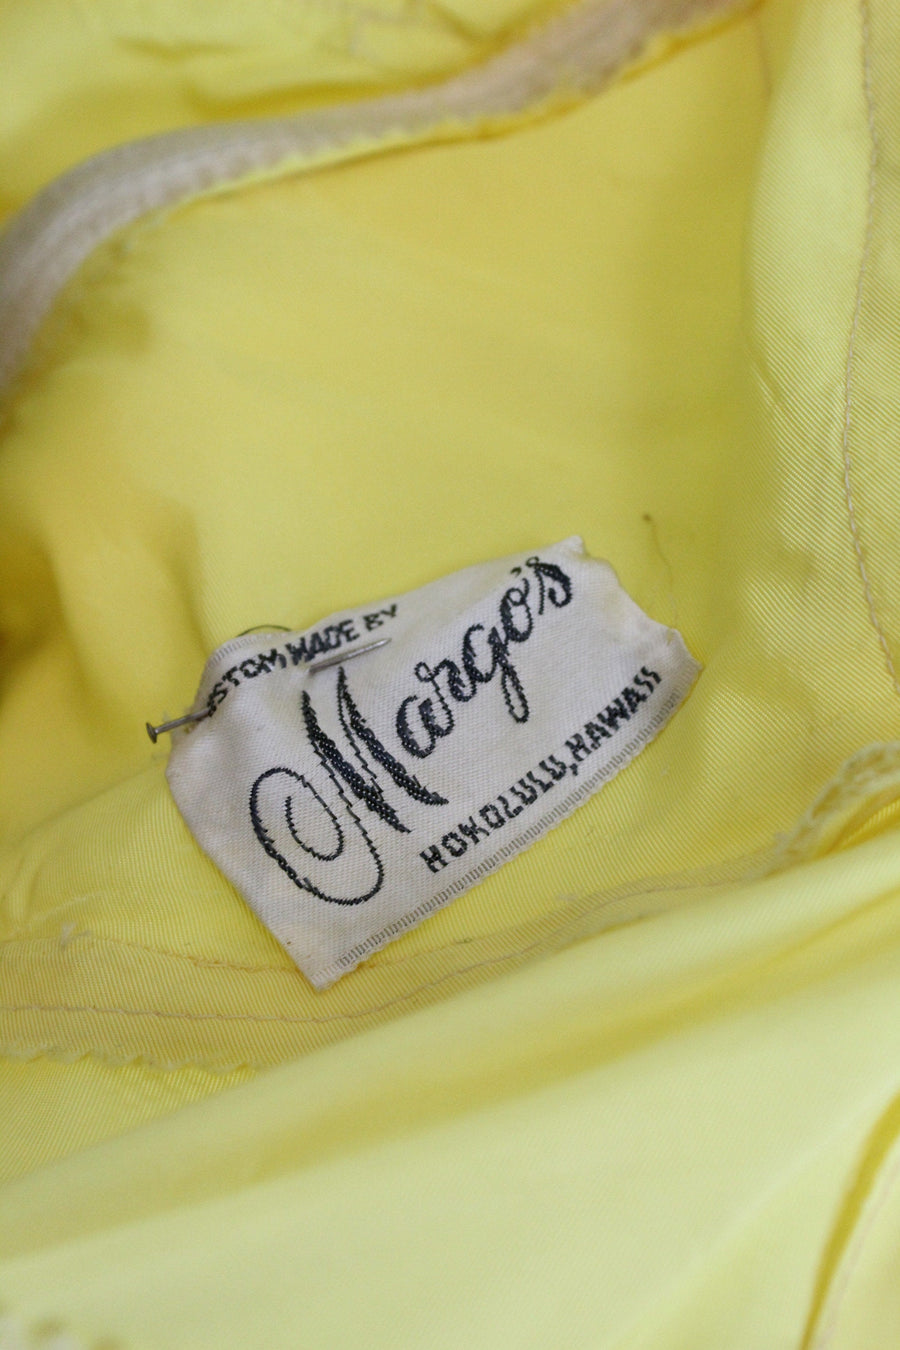 1950s strapless tulle dress xxs | vintage spring